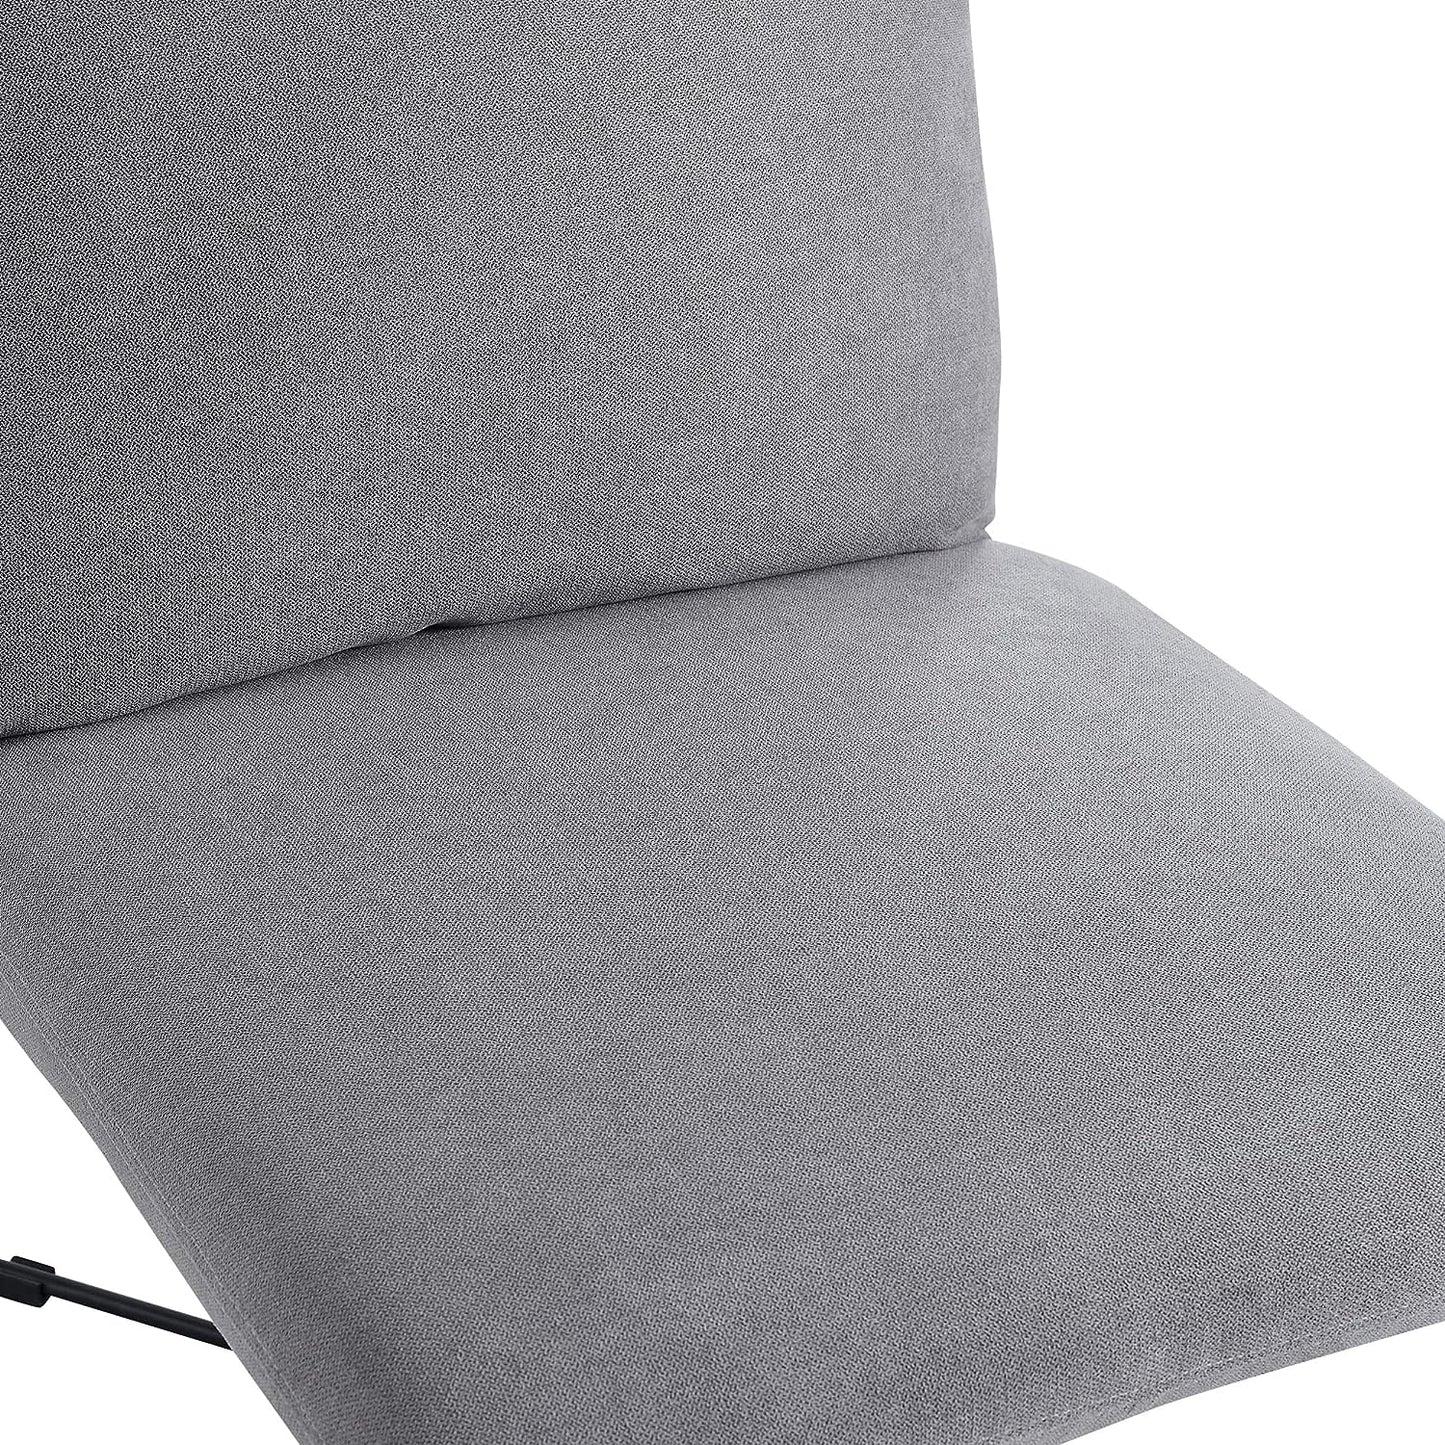 Classic Brands Eternity Upholstered Armless Accent Chair, Light Grey| Mid-Century Modern | Ergonomic